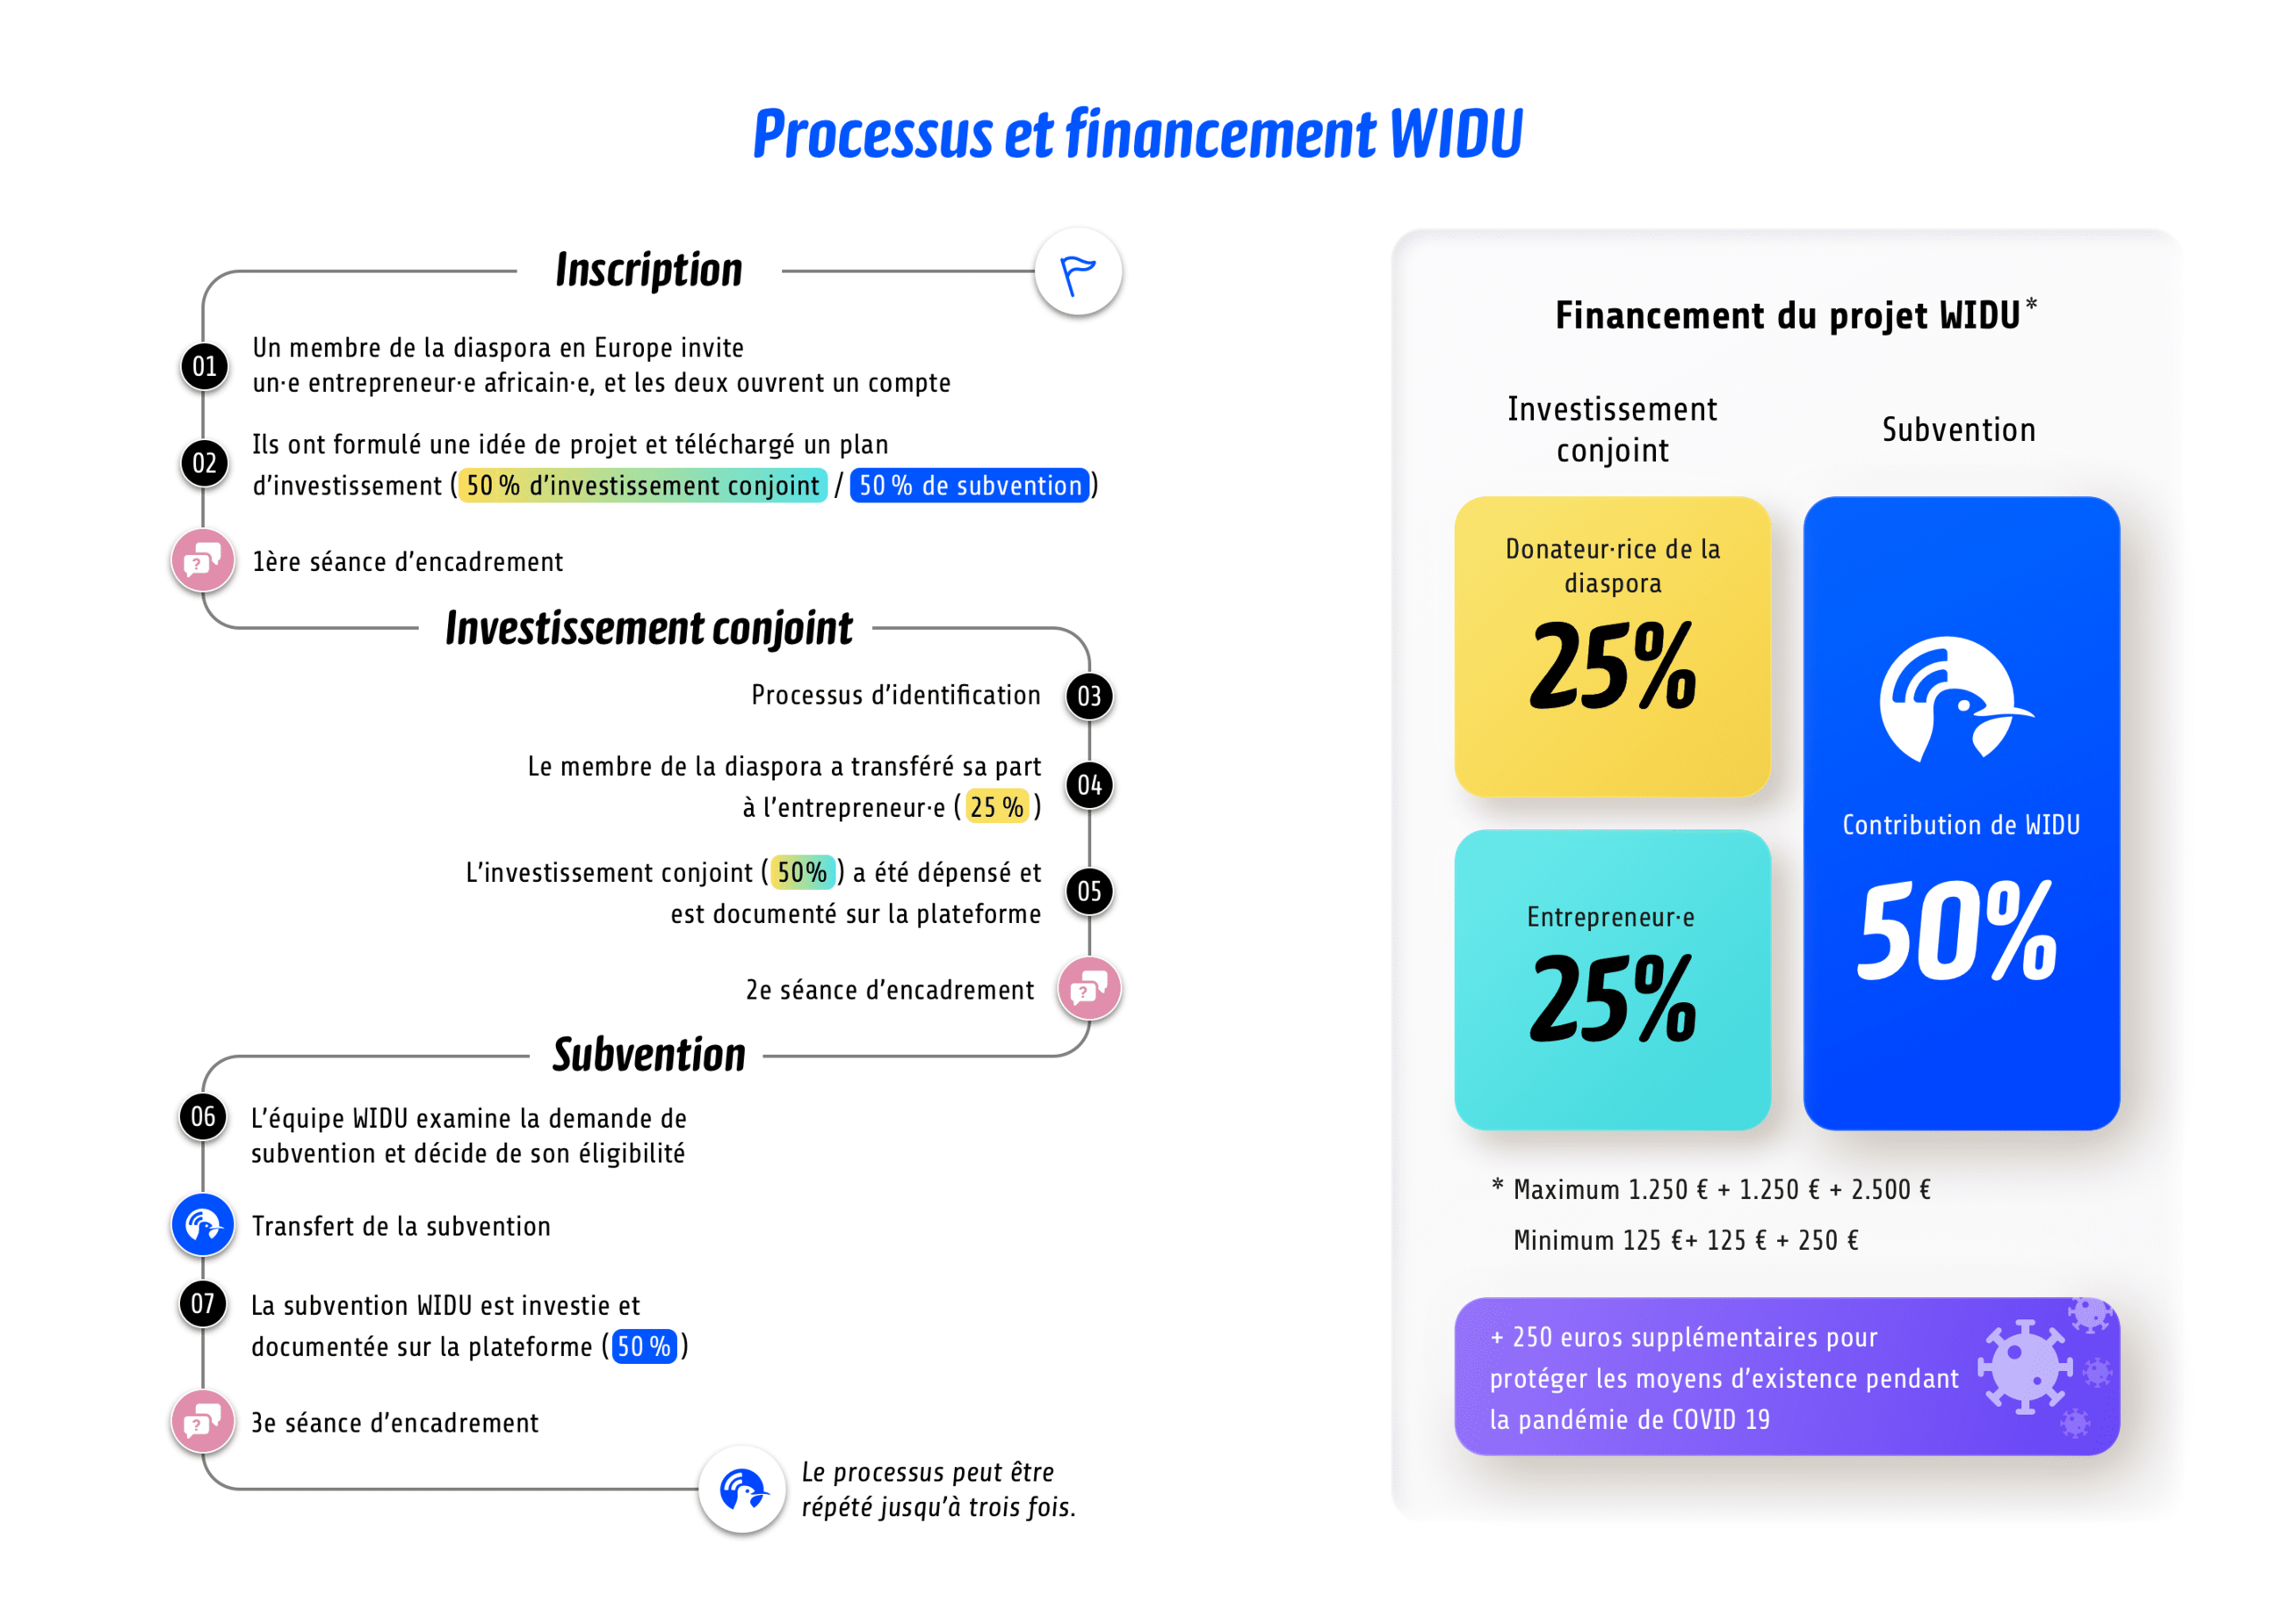 WIDU process and financing - FR